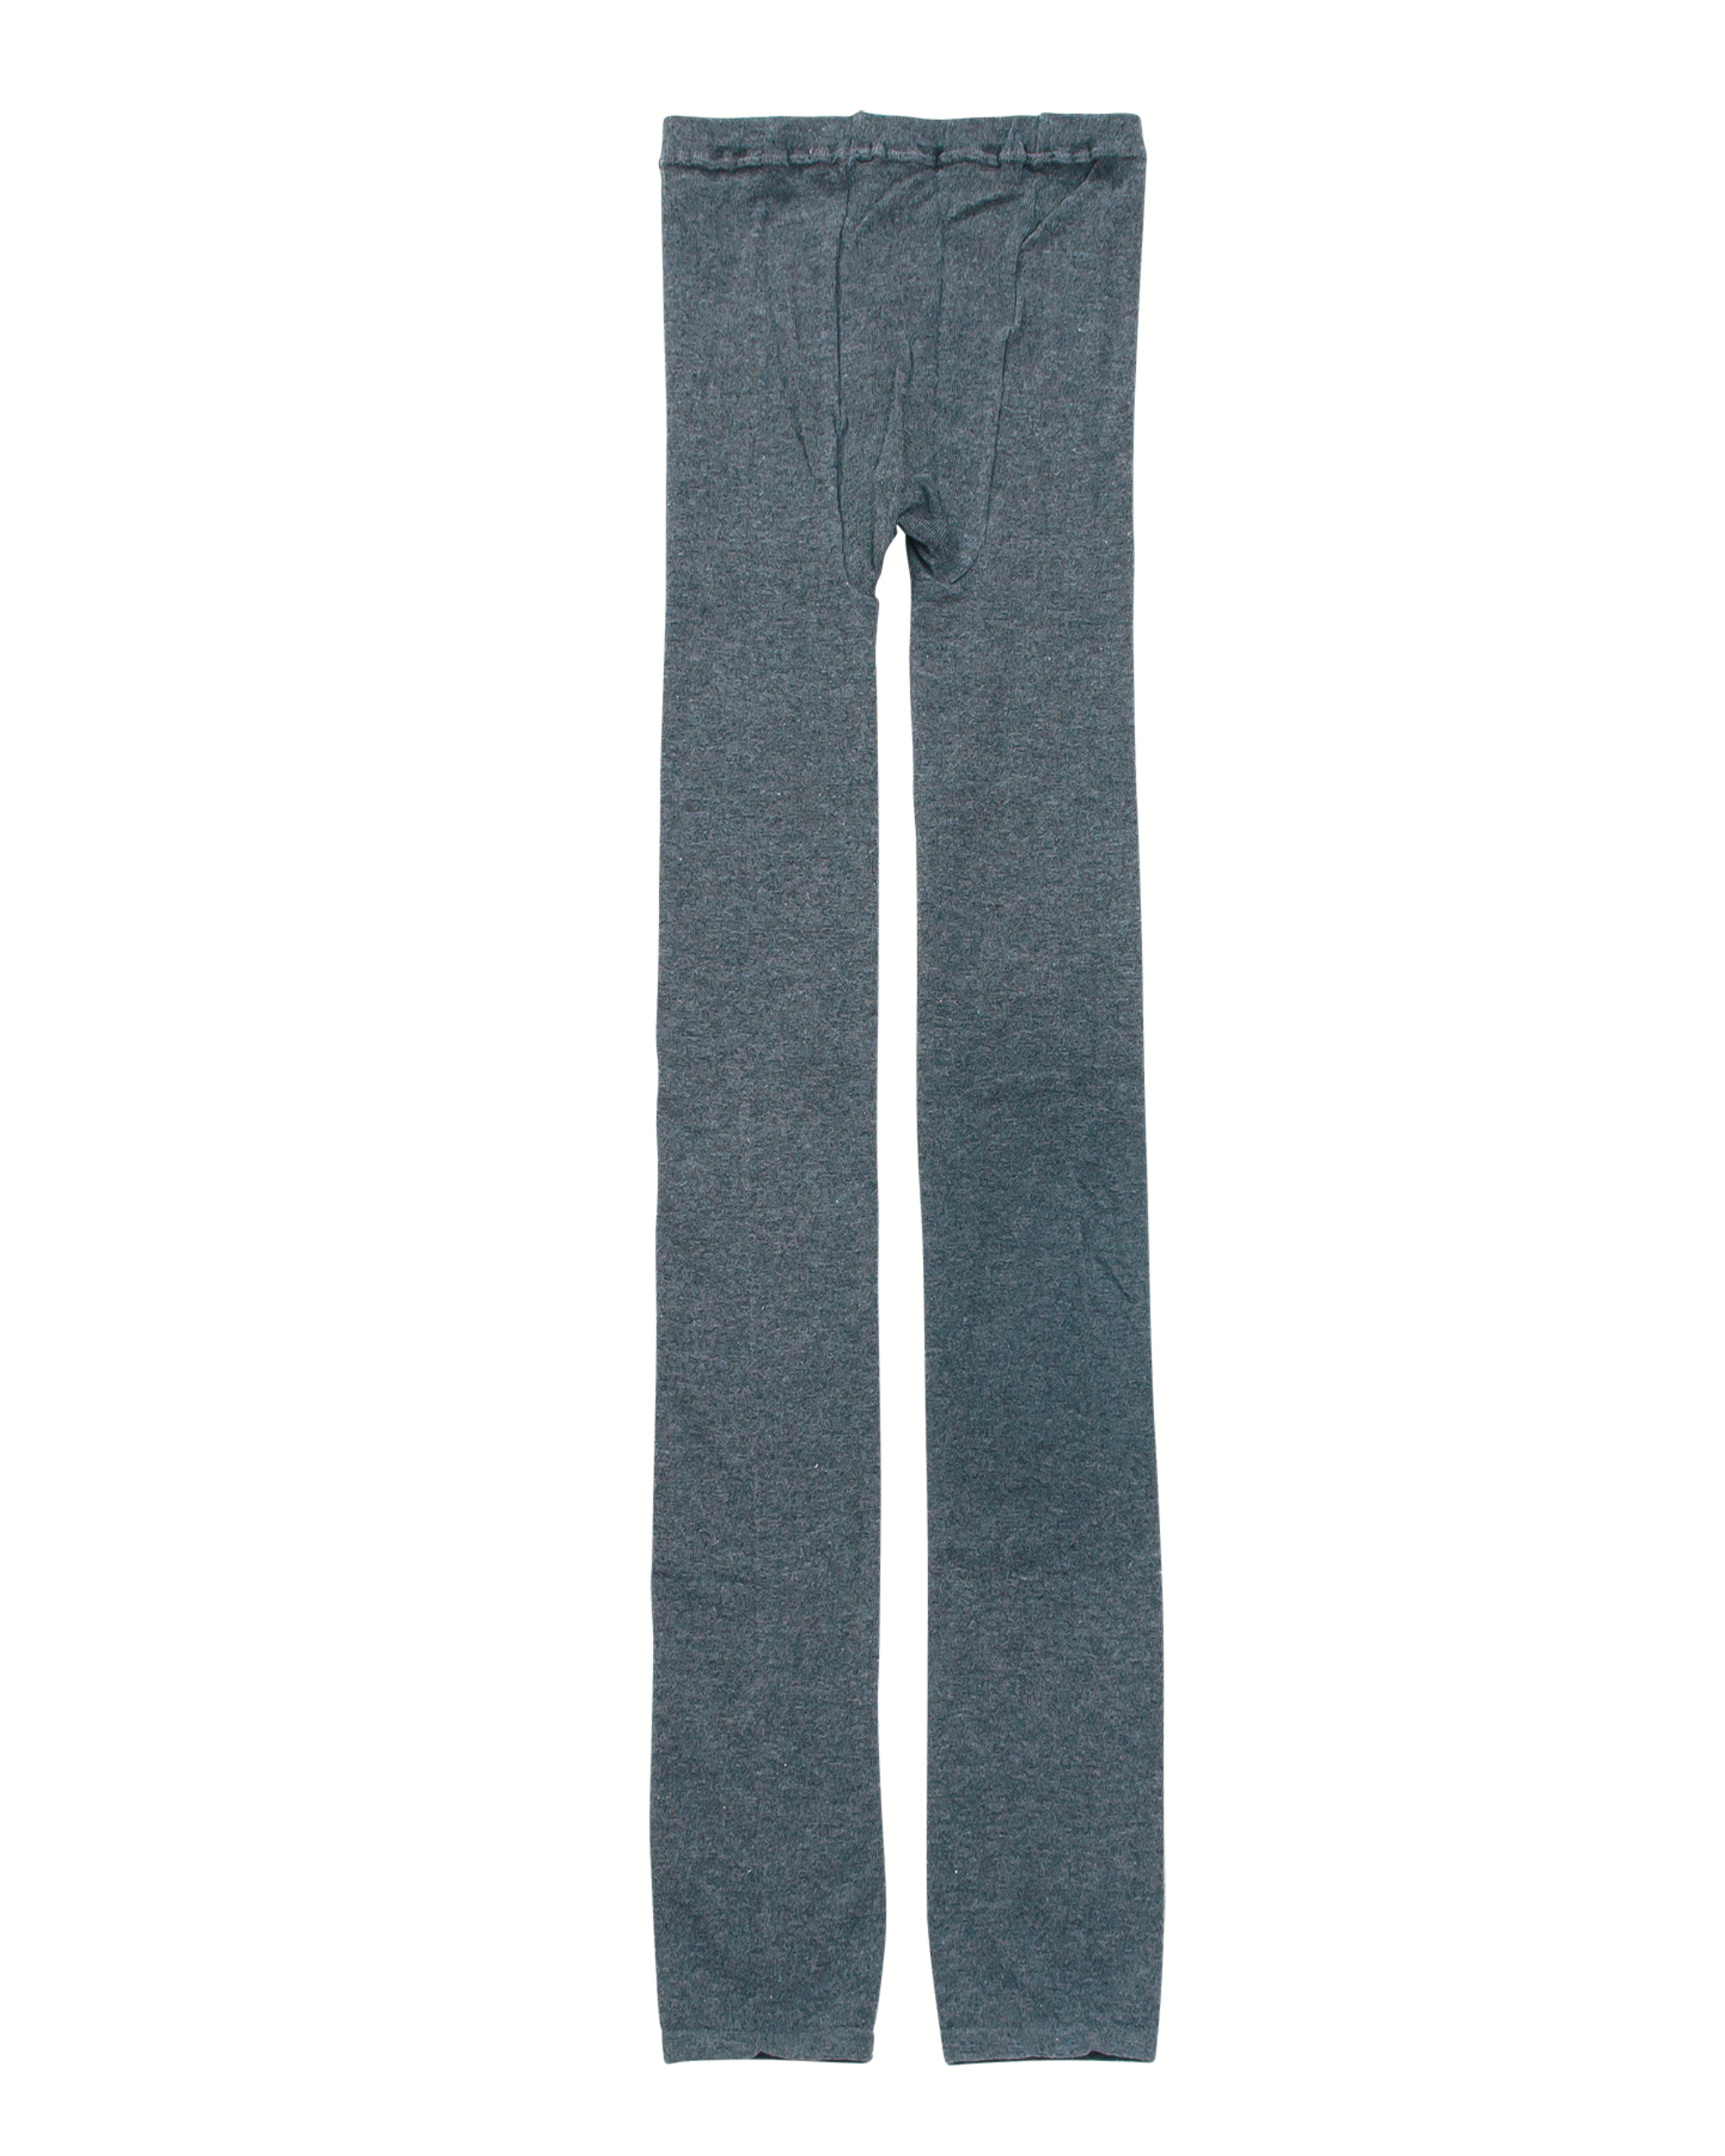 memeri : modal cotton leggings long